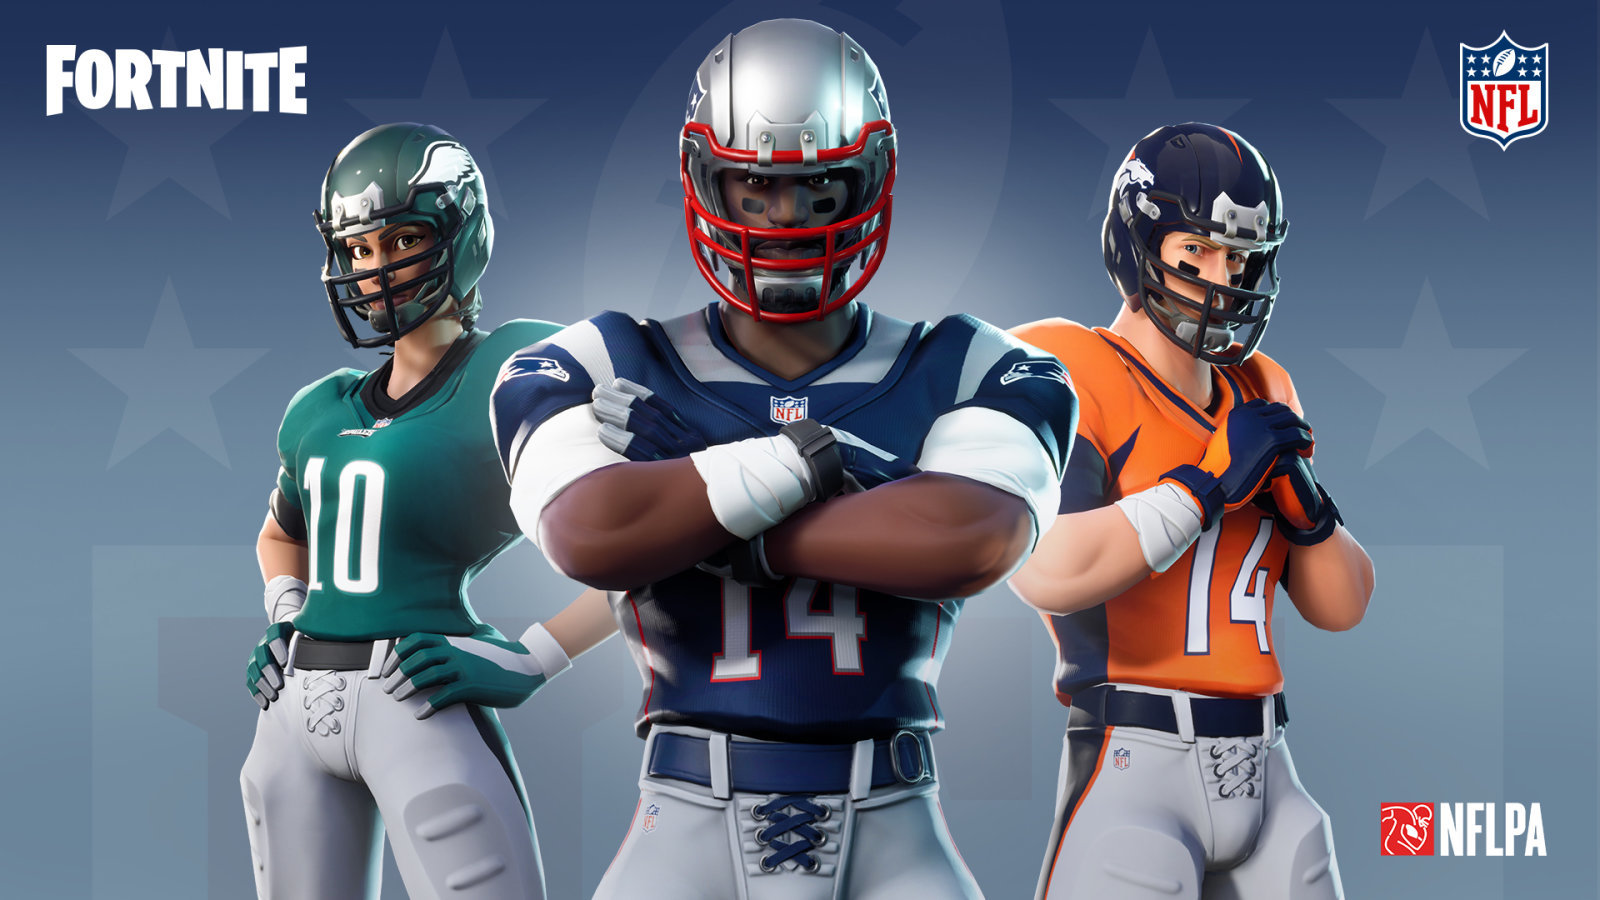 Fortnite is adding NFL team jerseys emotes and more